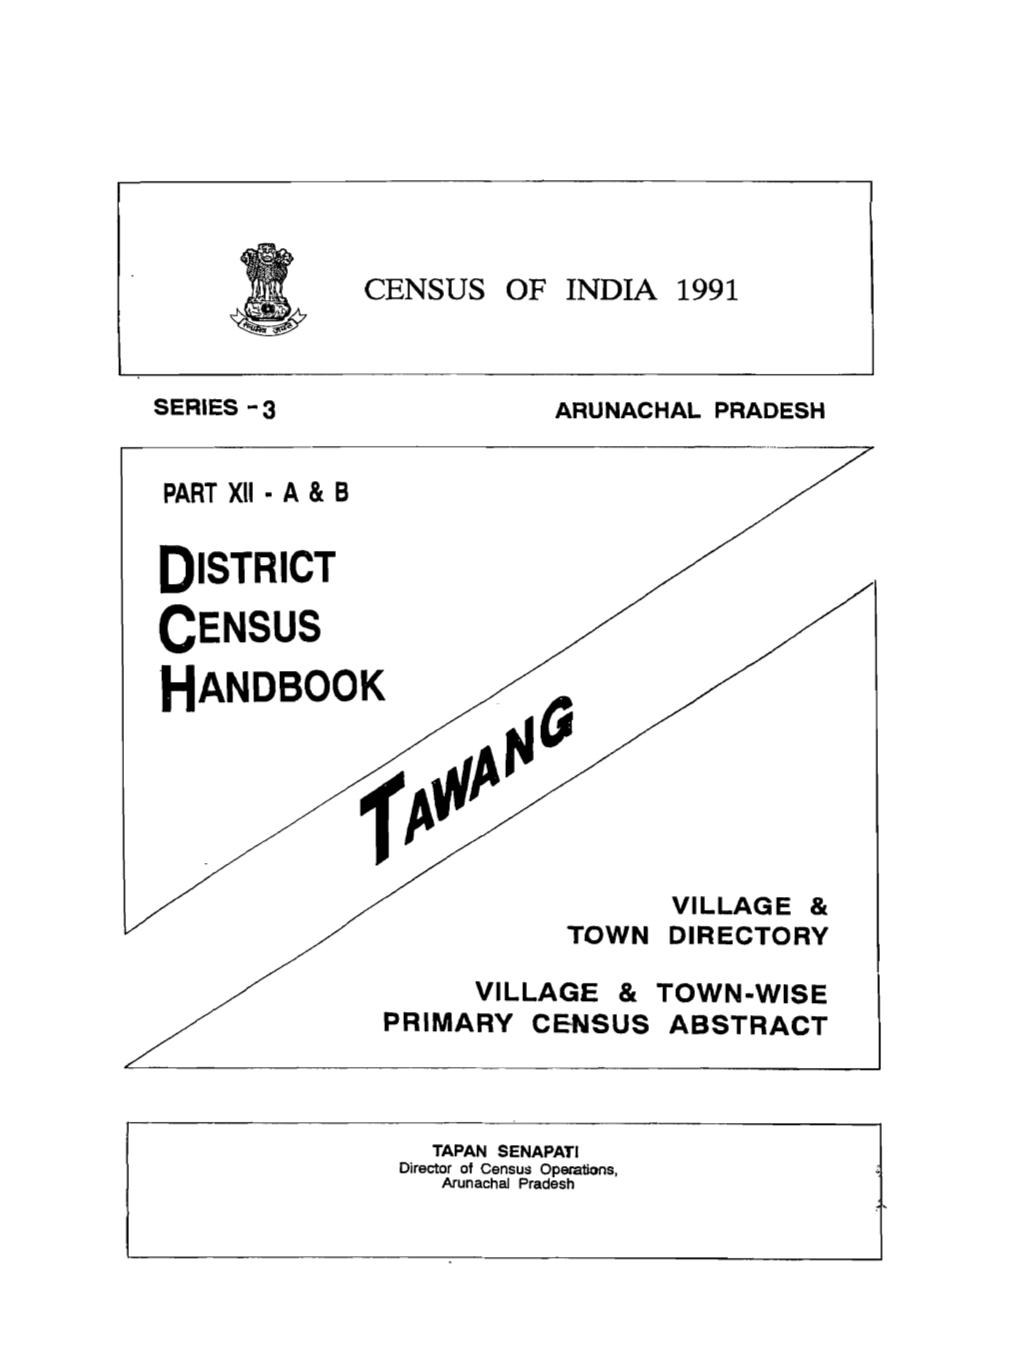 District Census Handbook, Tawang, Part XII a & B, Series-3, Arunachal